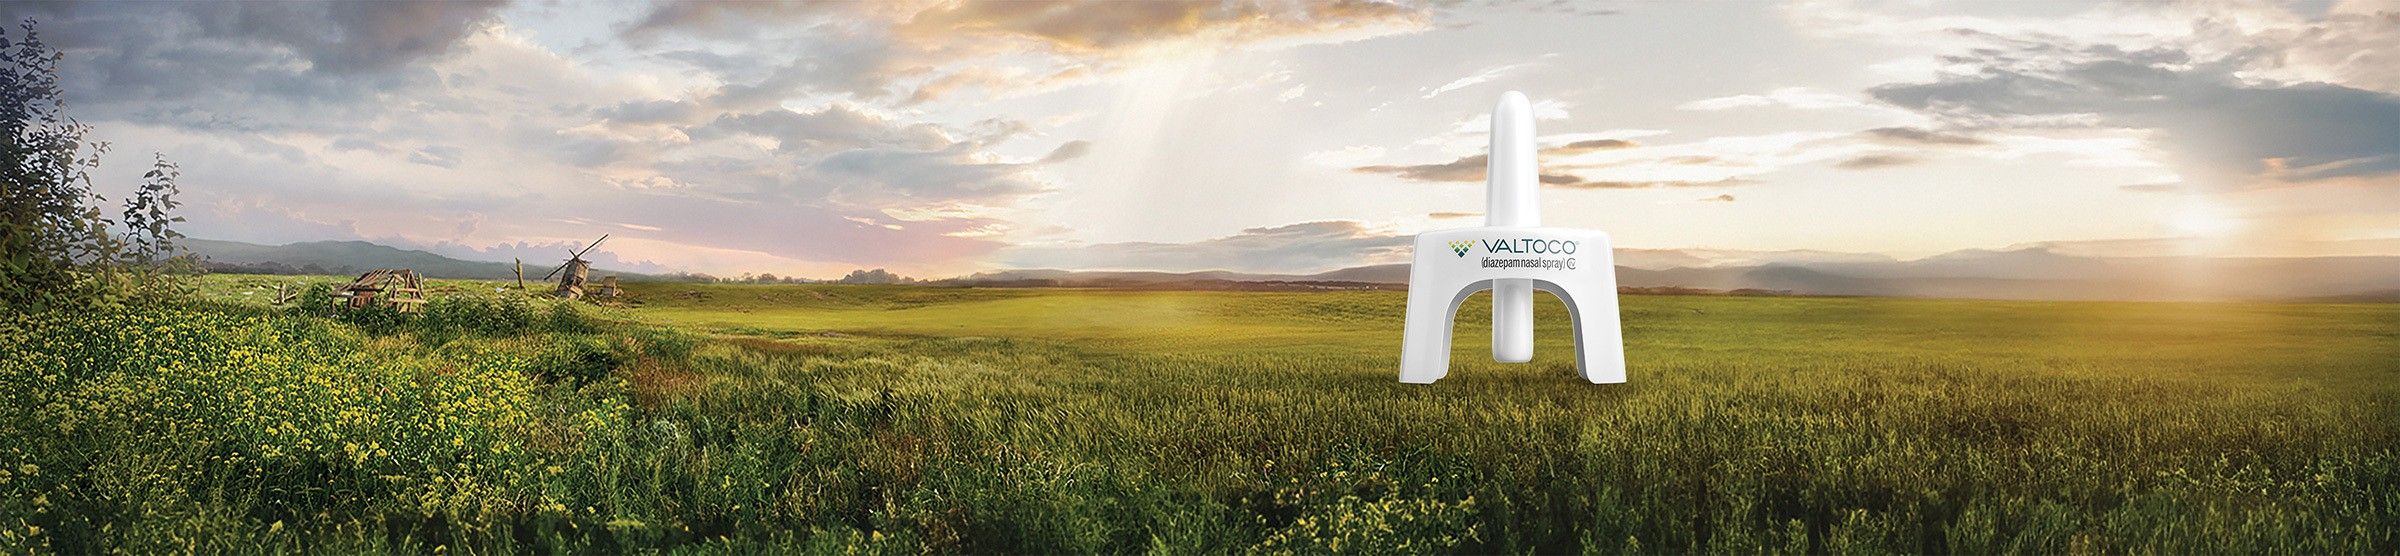 VALTOCO sprayer in a field with sunshine